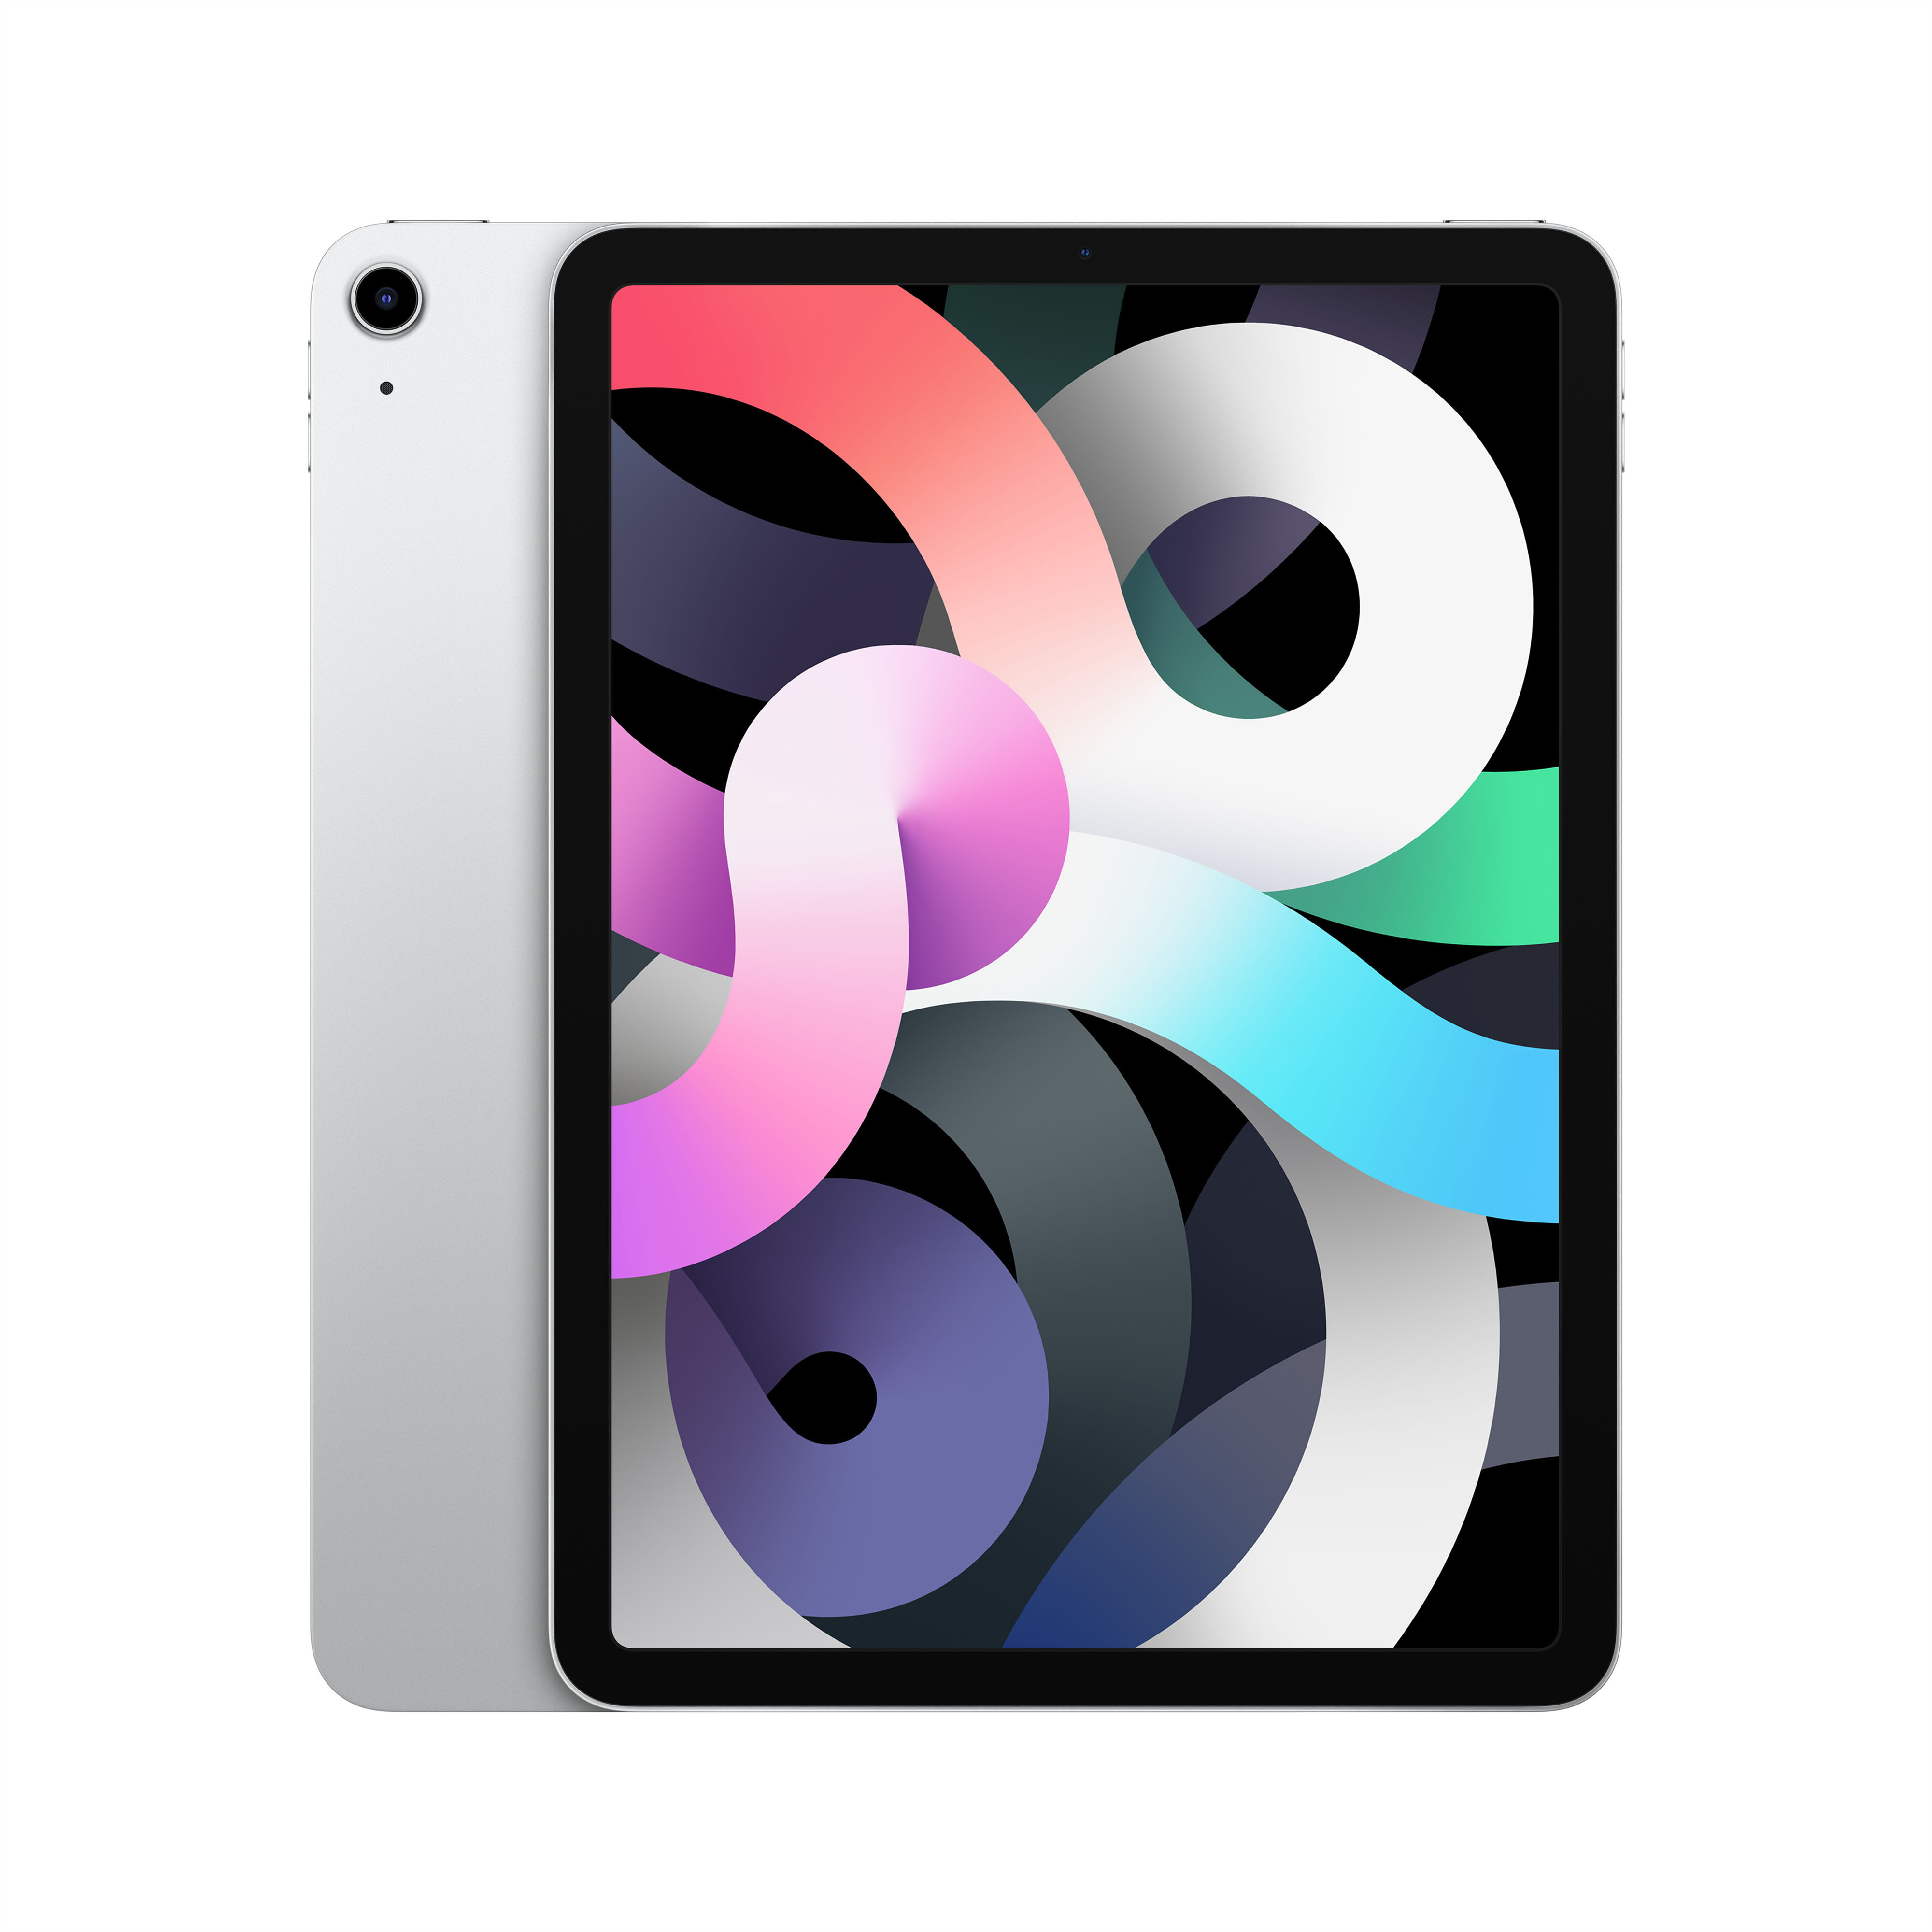 RURU_iPad-Air_Q420_Silver-Wi-fi_PDP-Image-1B